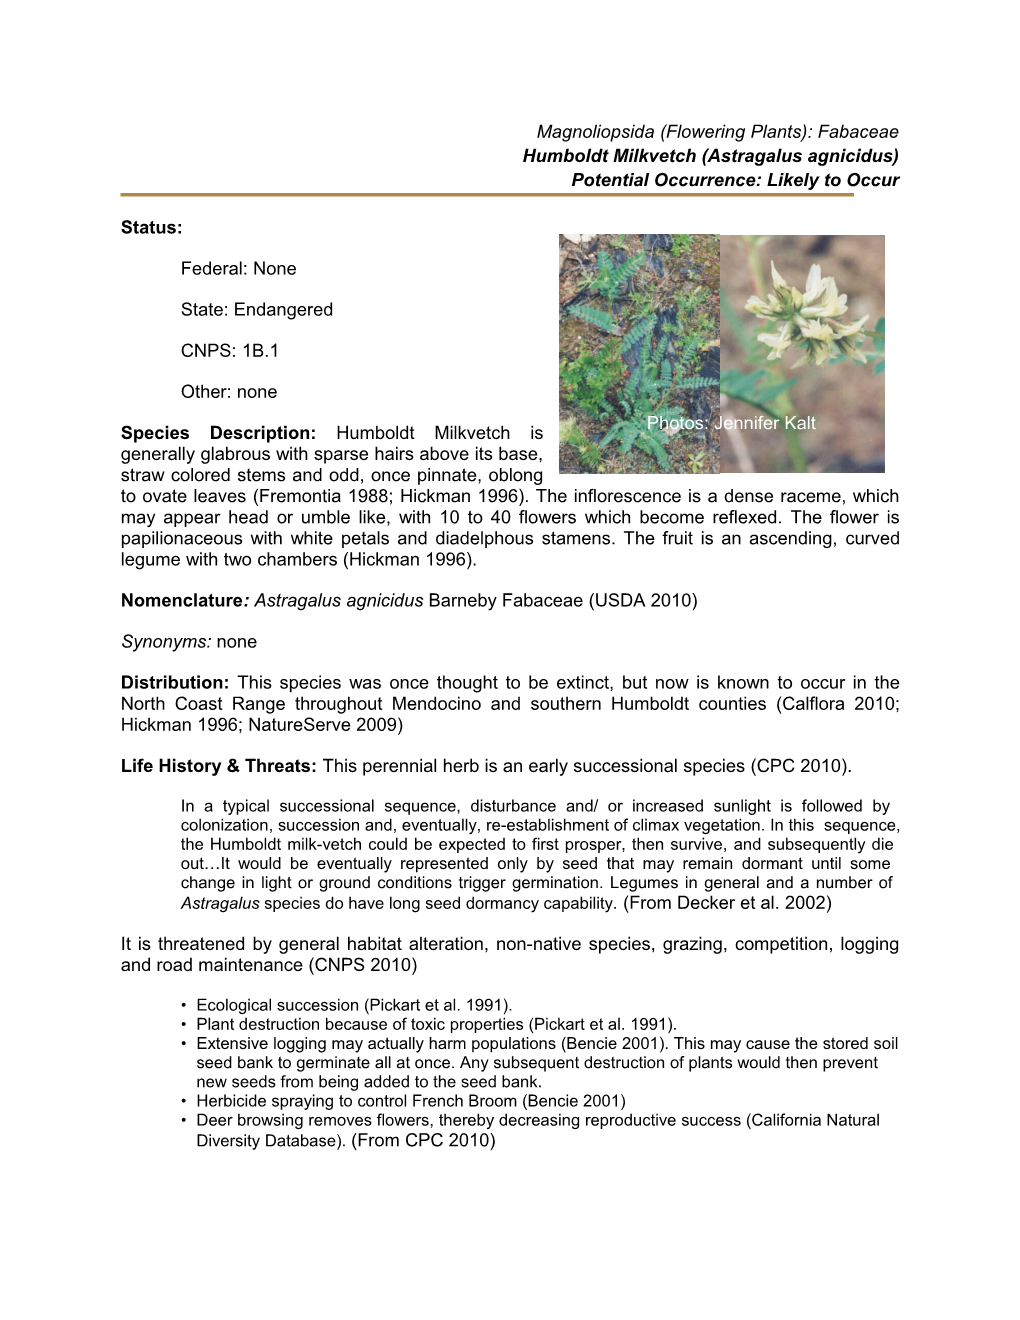 Humboldt Milkvetch (Astragalus Agnicidus)